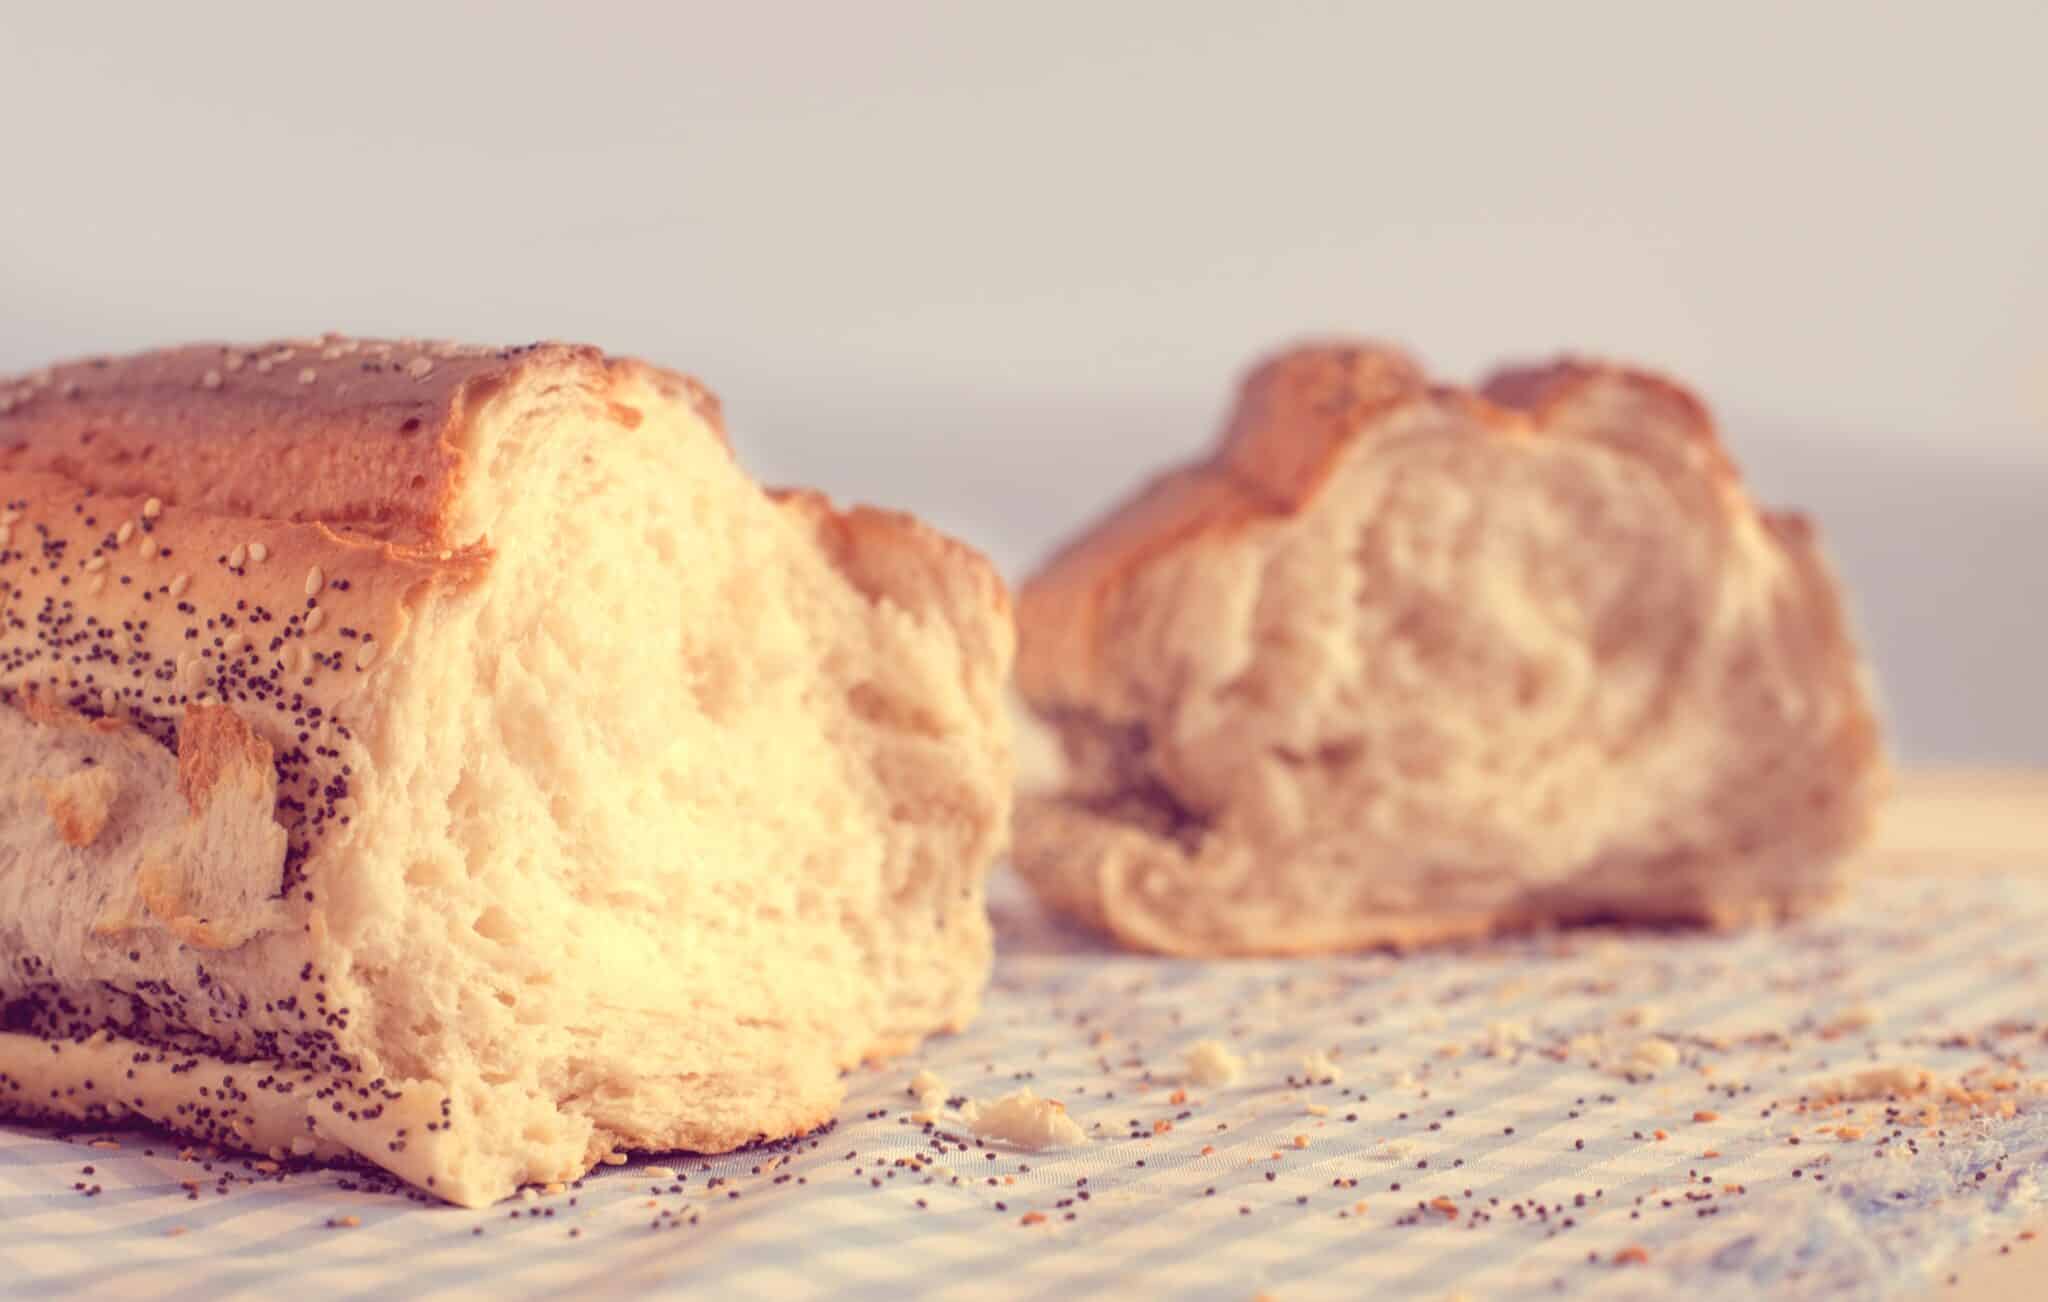 crusty bread | Photo by Mike Kenneally on Unsplash